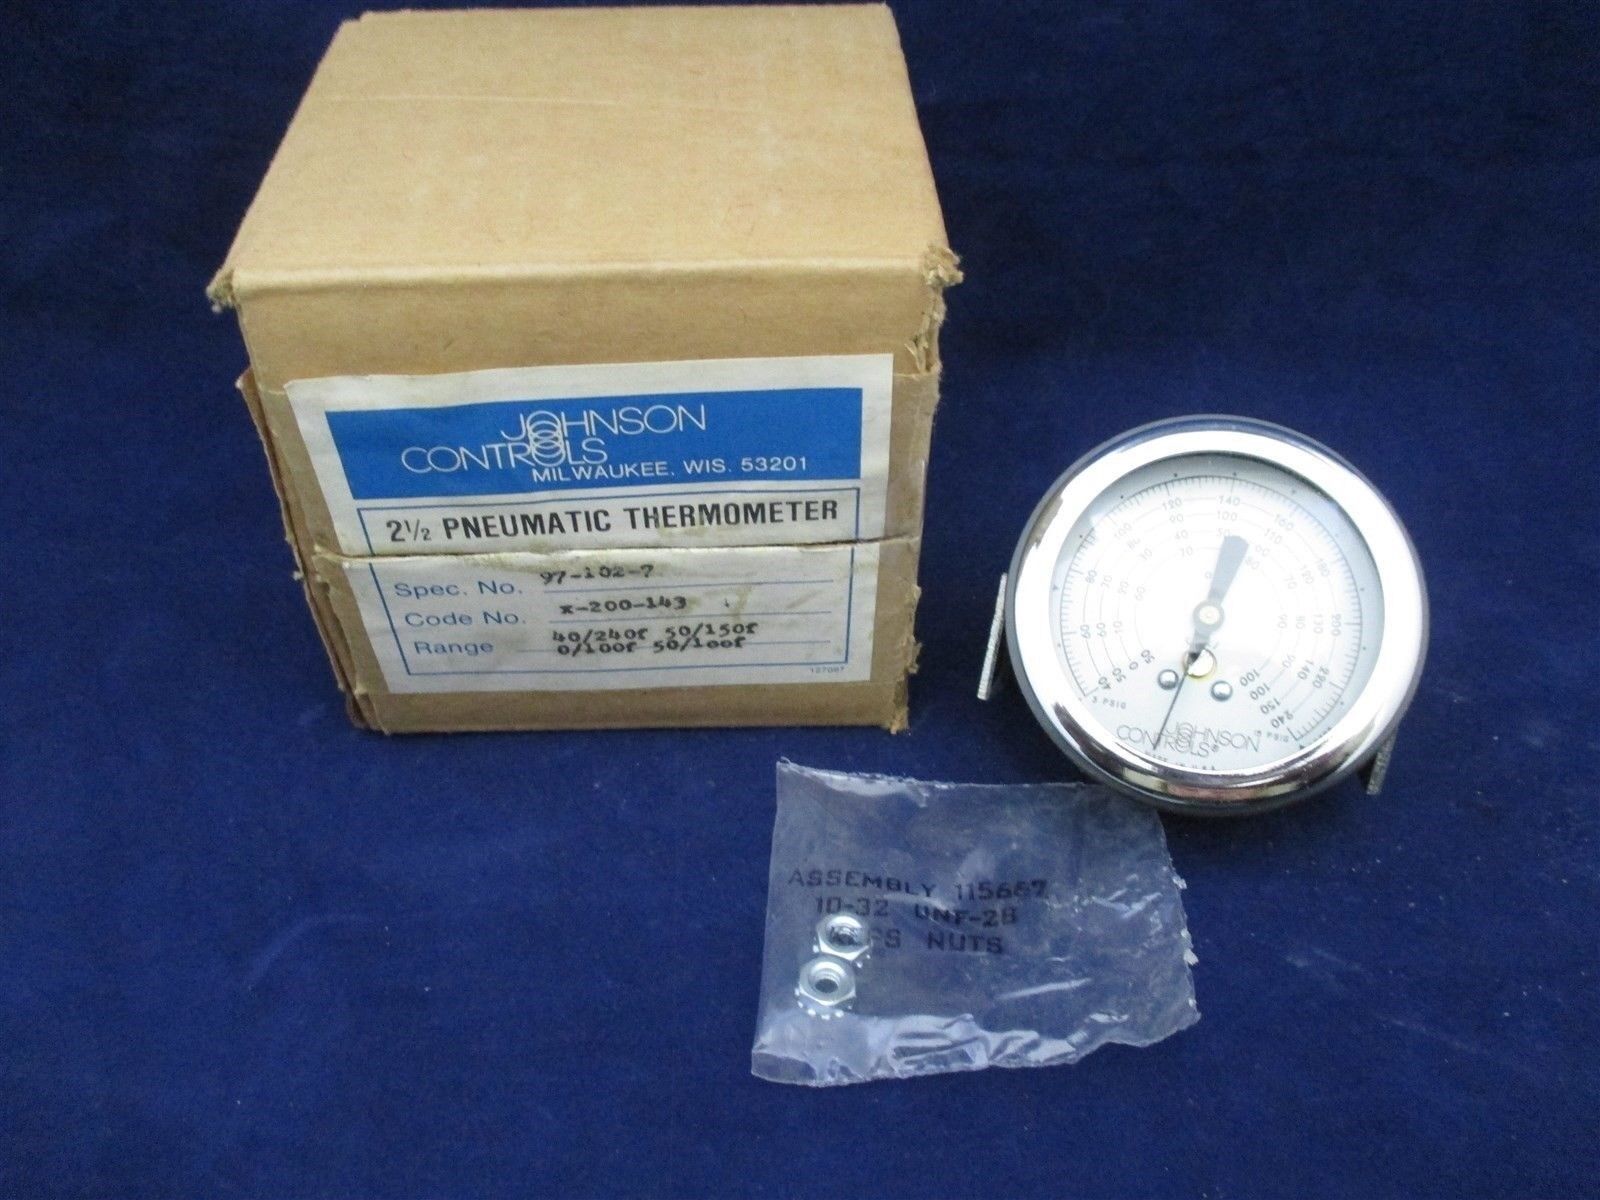 Johnson Controls 97-102-7 Pneumatic Thermoeter new